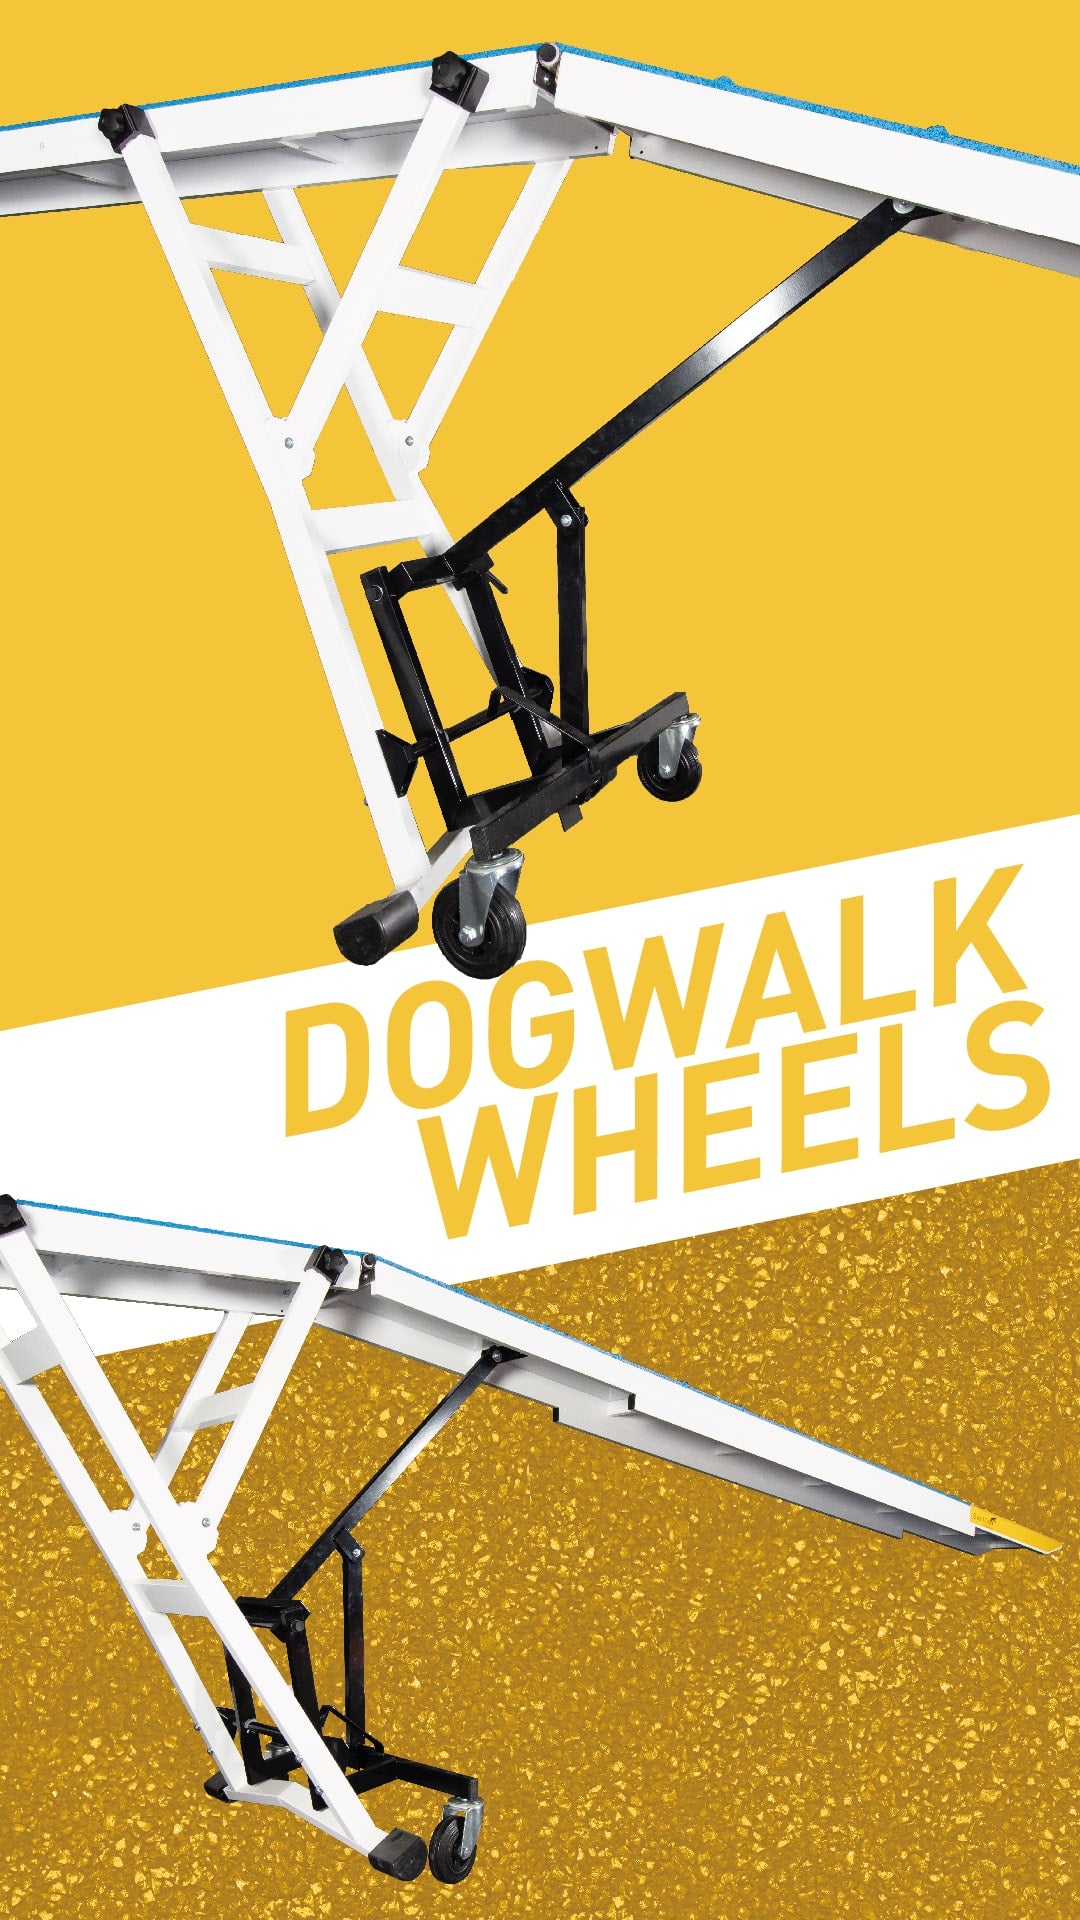 DogWalk Wheels